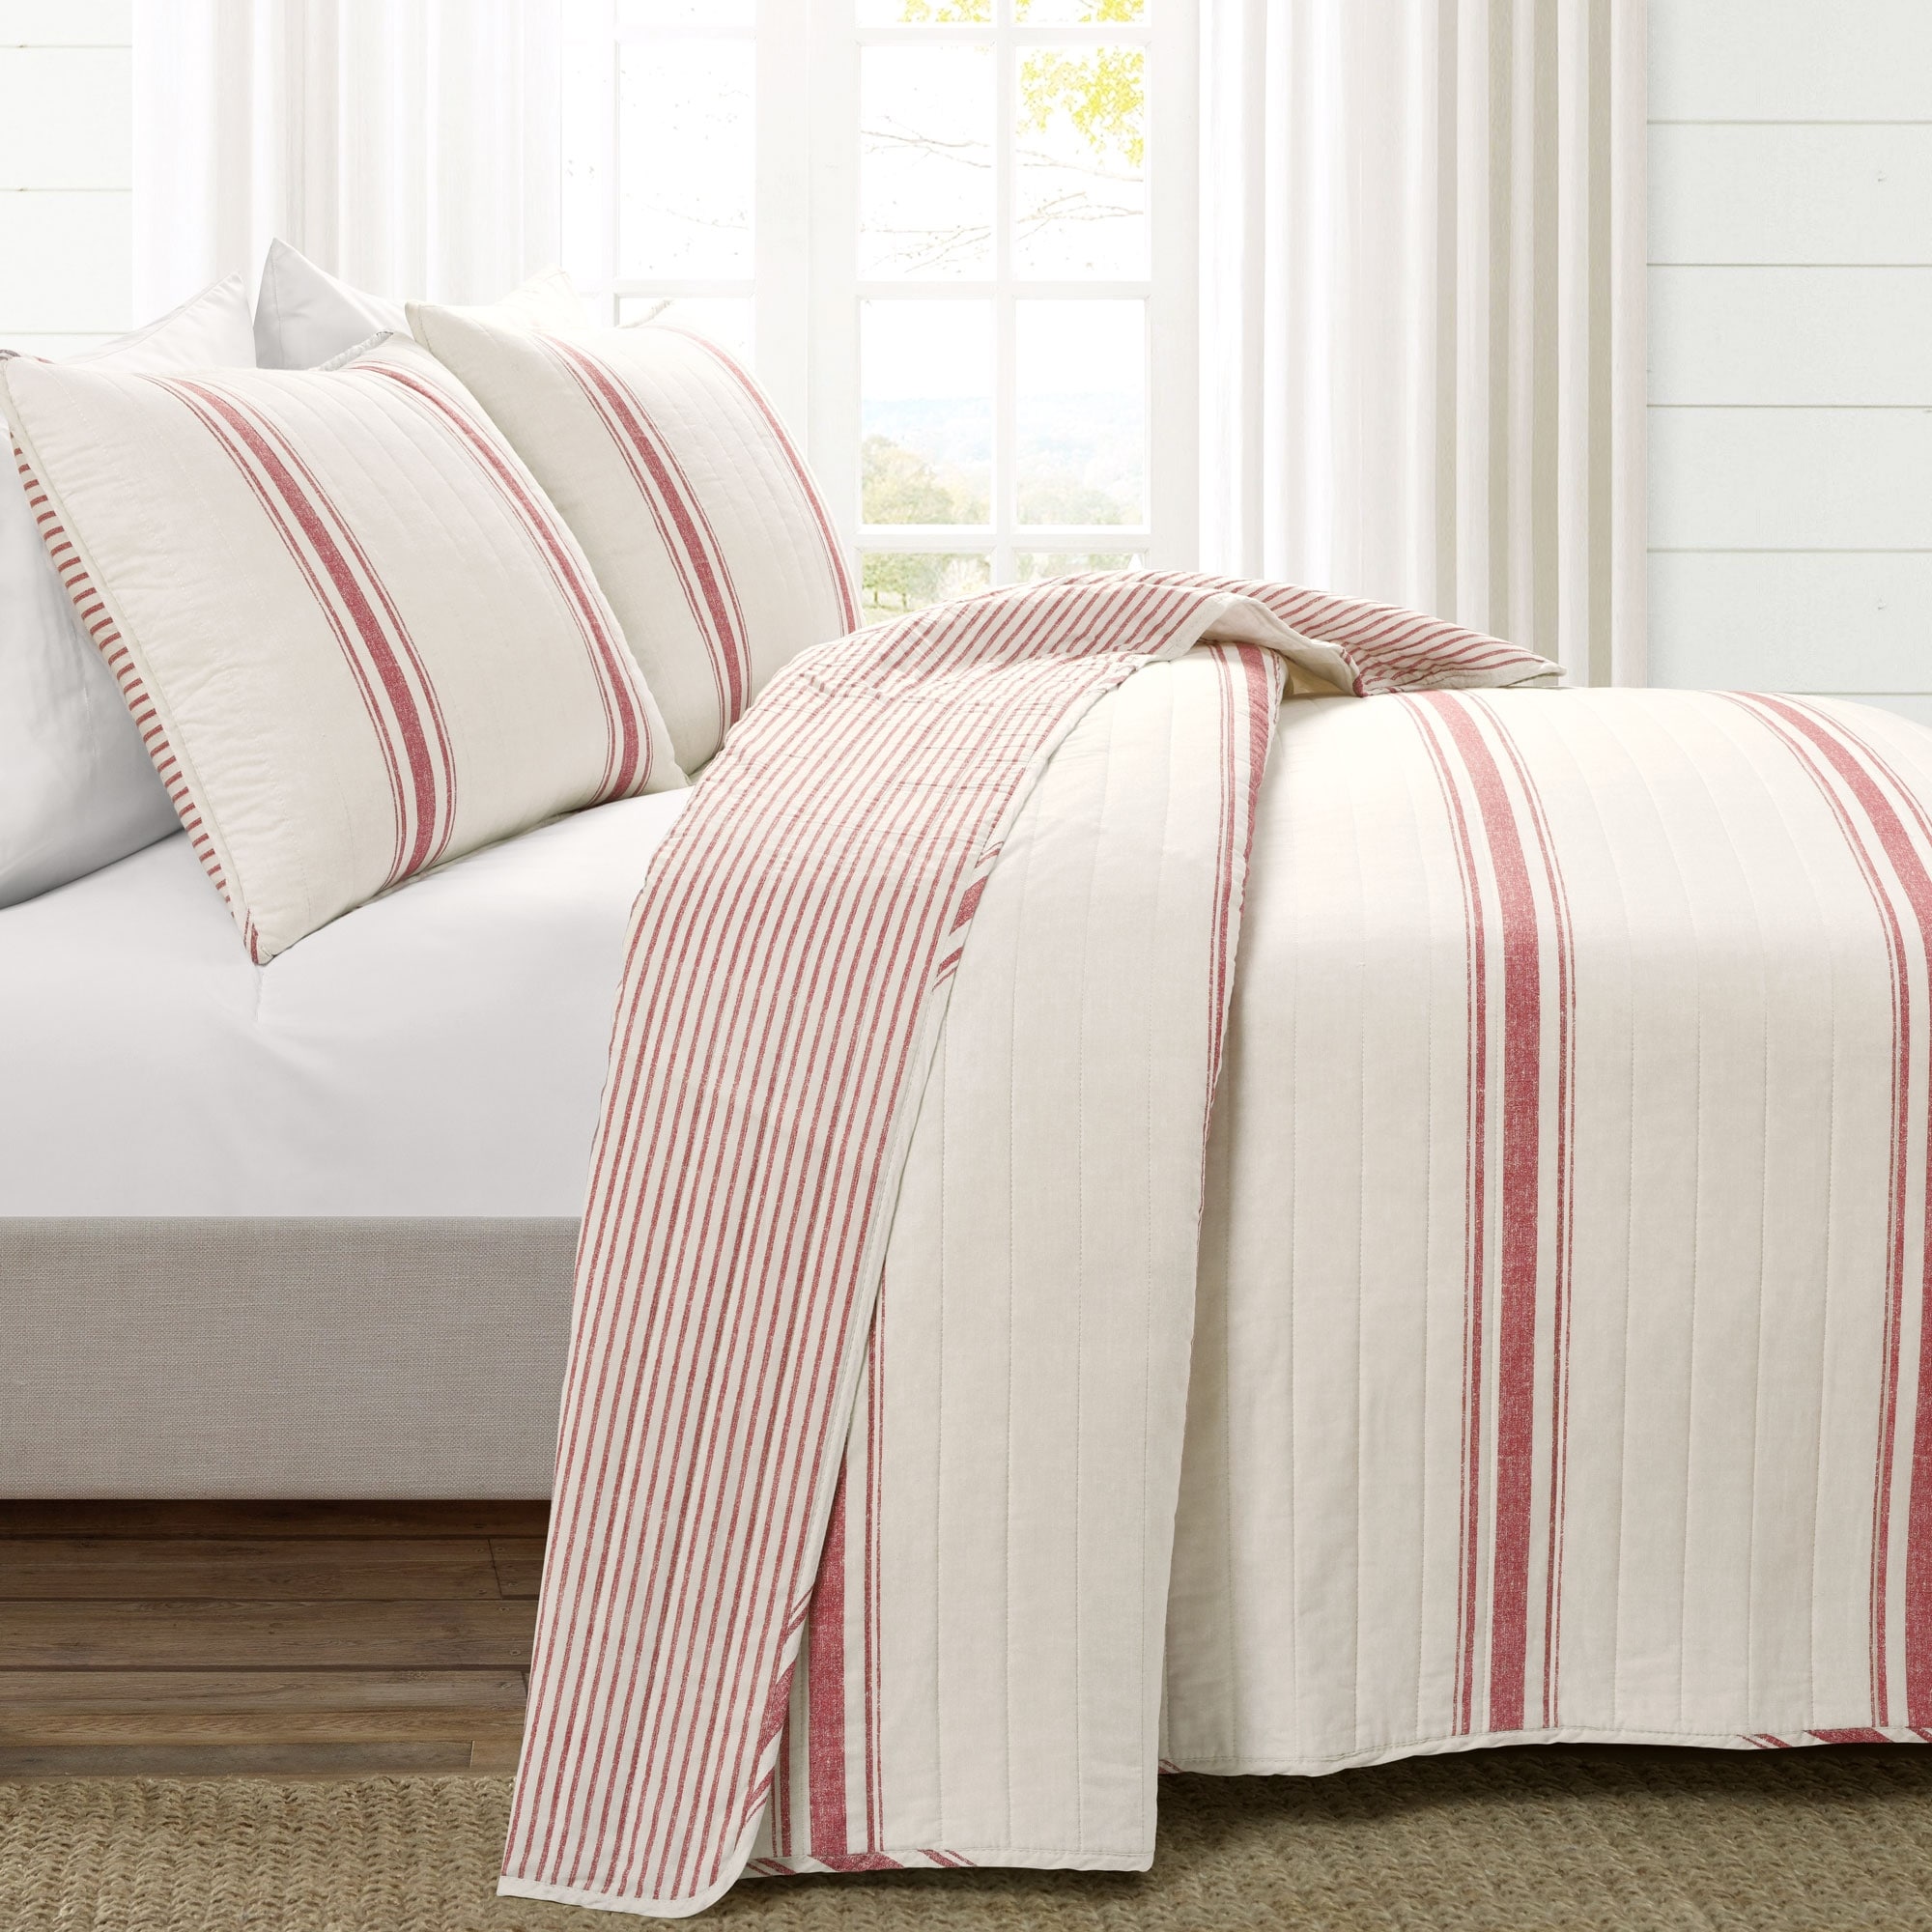 Full Details about   Lush Decor Gray Comforter Farmhouse Stripe 3 Piece Reversible Bedding Set 